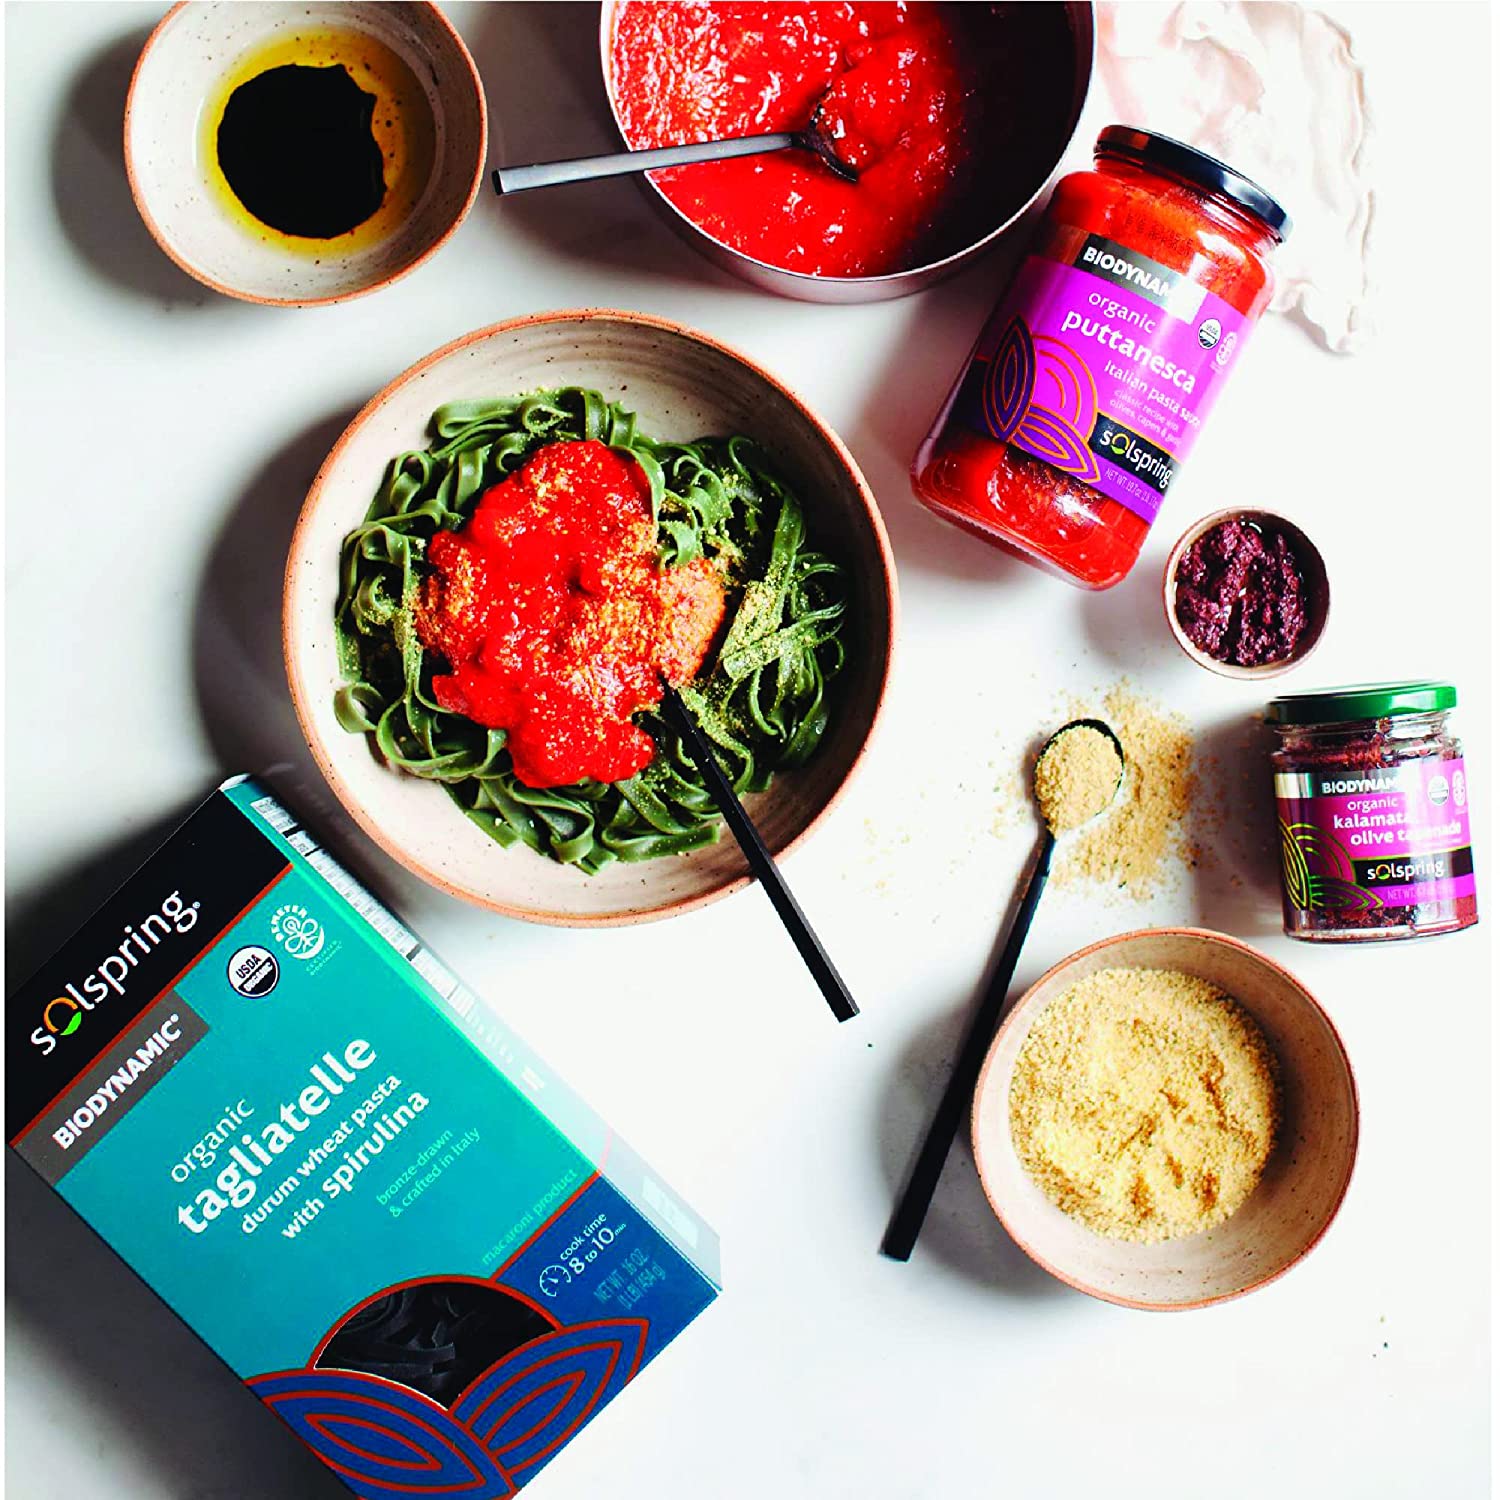 Dr. Mercola Solspring Biodynamic Organic Tomato Basil Italian Pasta Sauce, 1 Jar, about 4.5 Servings per Jar (19.7 Oz. per Jar ), non GMO, Gluten Free, Soy Free, Organic Demeter Certified...